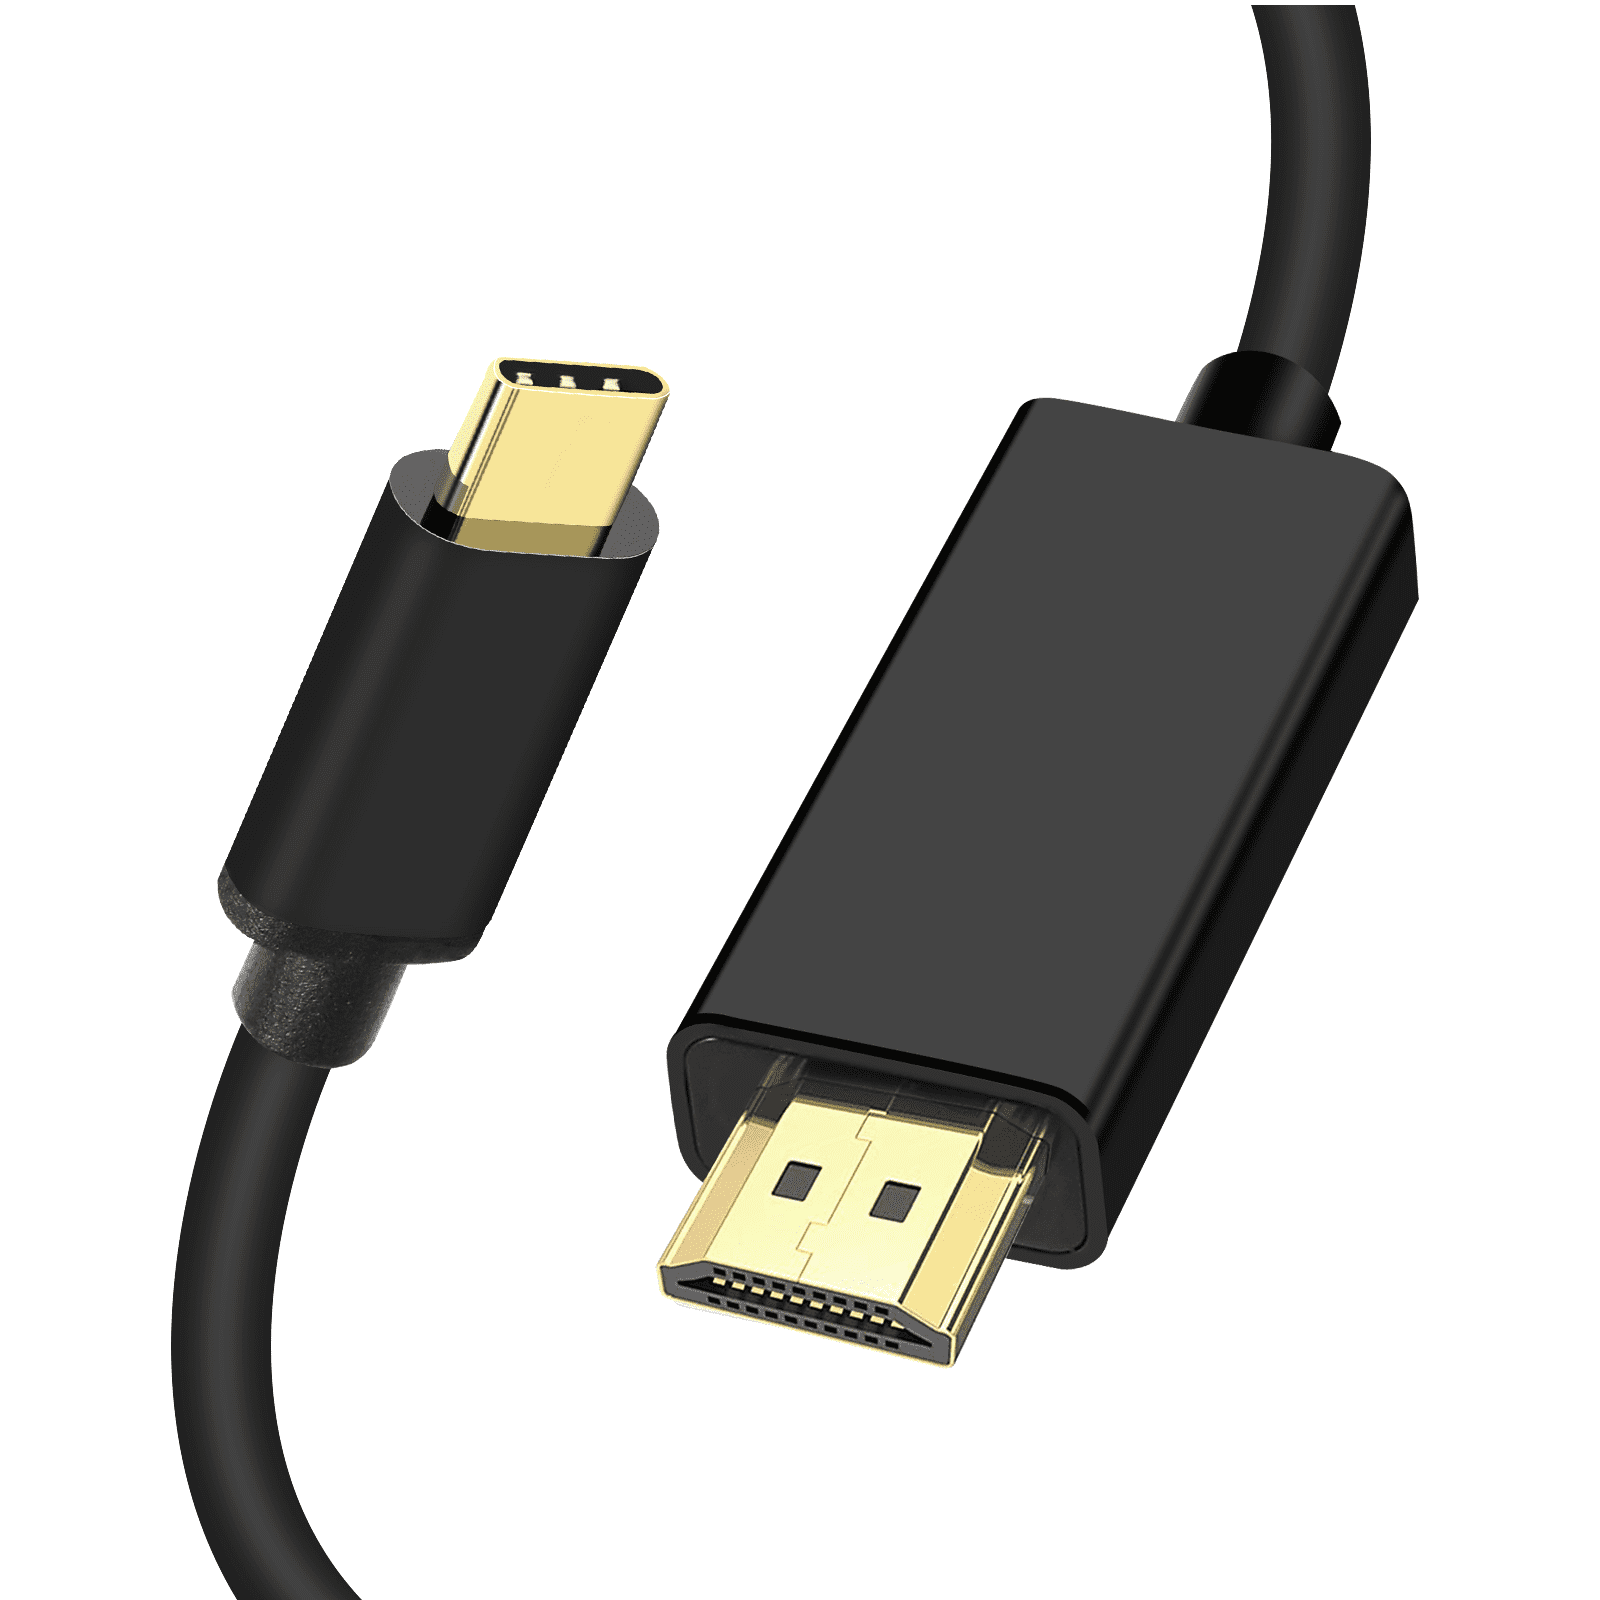 Forældet kandidatskole Stat USB C to HDMI Cable 6ft, [USB 3.1 Type C to HDMI 4K, High-Speed] USB Type C  to HDMI Cable for Home Office, [Thunderbolt 3 Compatible] Compatible With  Nokia 8 - Walmart.com